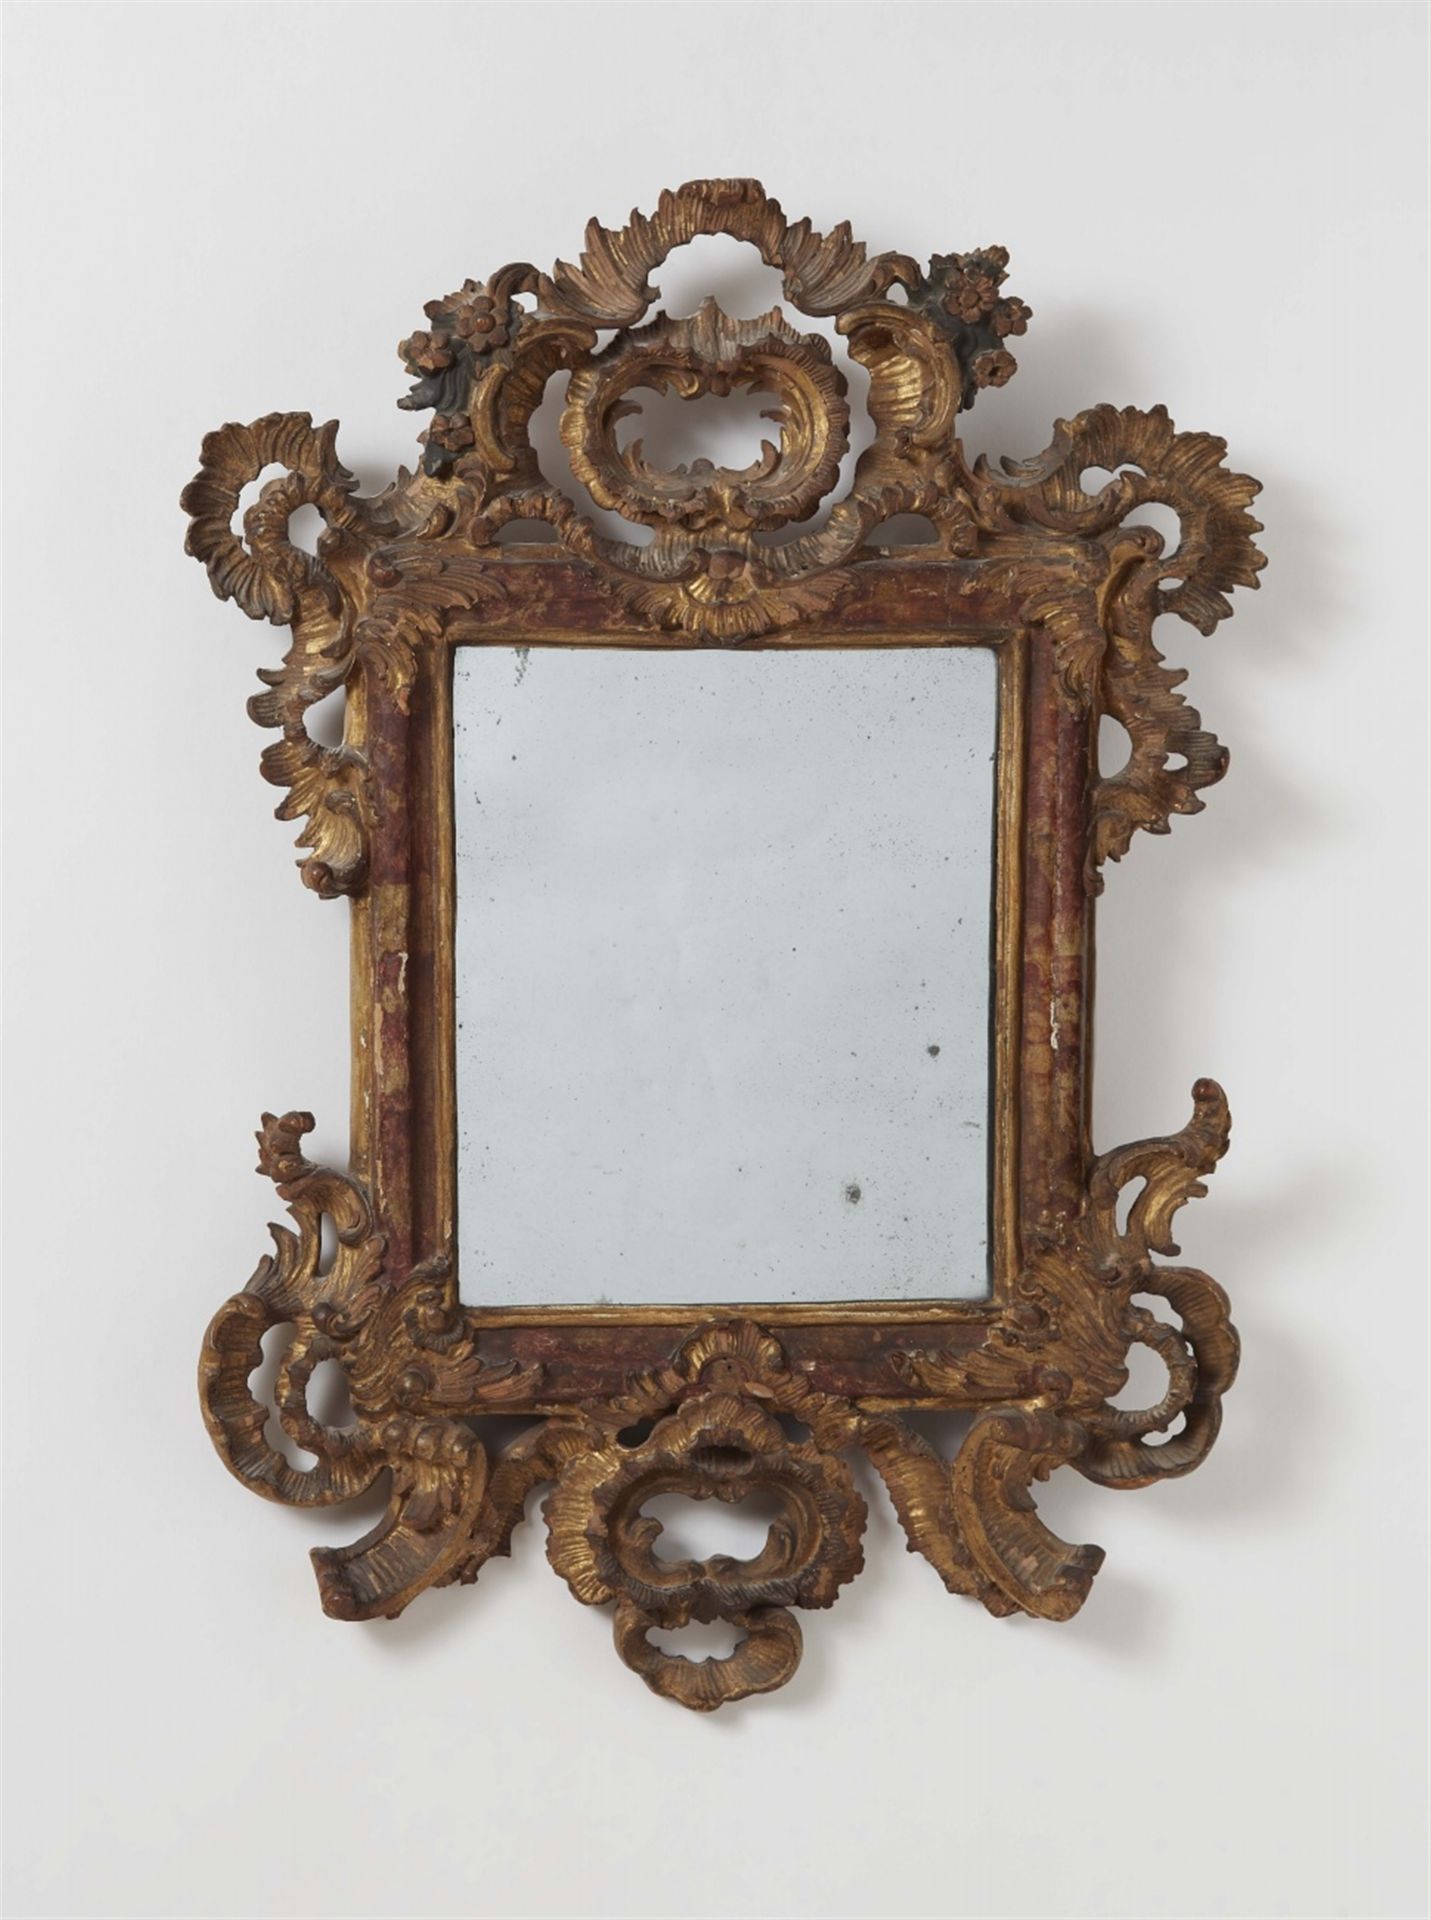 A Venetian Rococo mirror